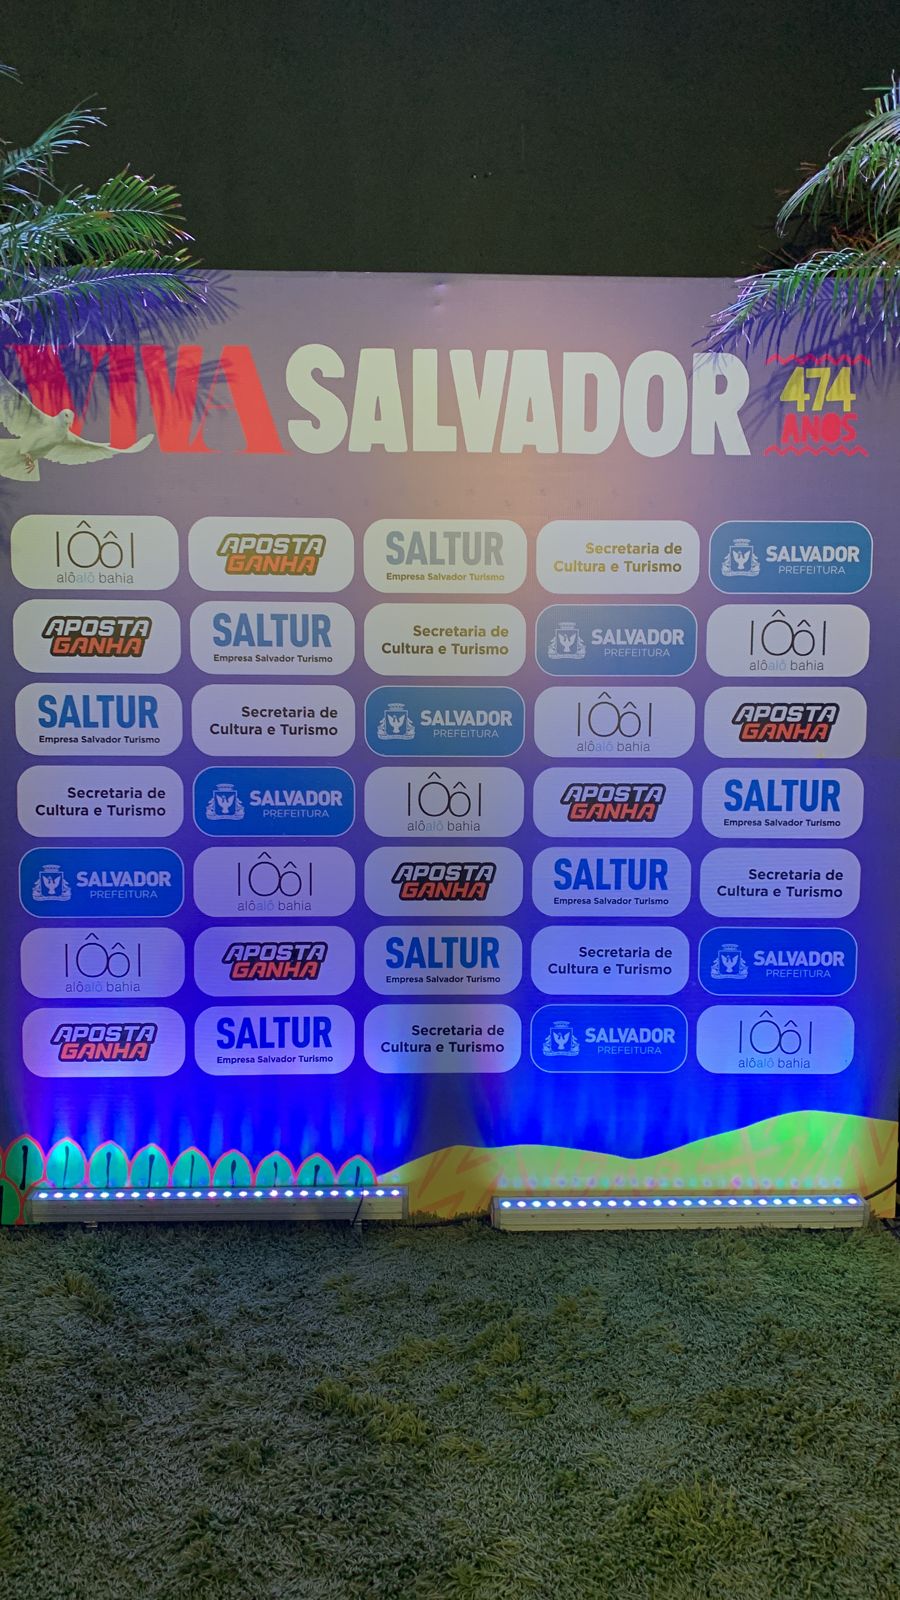 Viva Salvador                                        